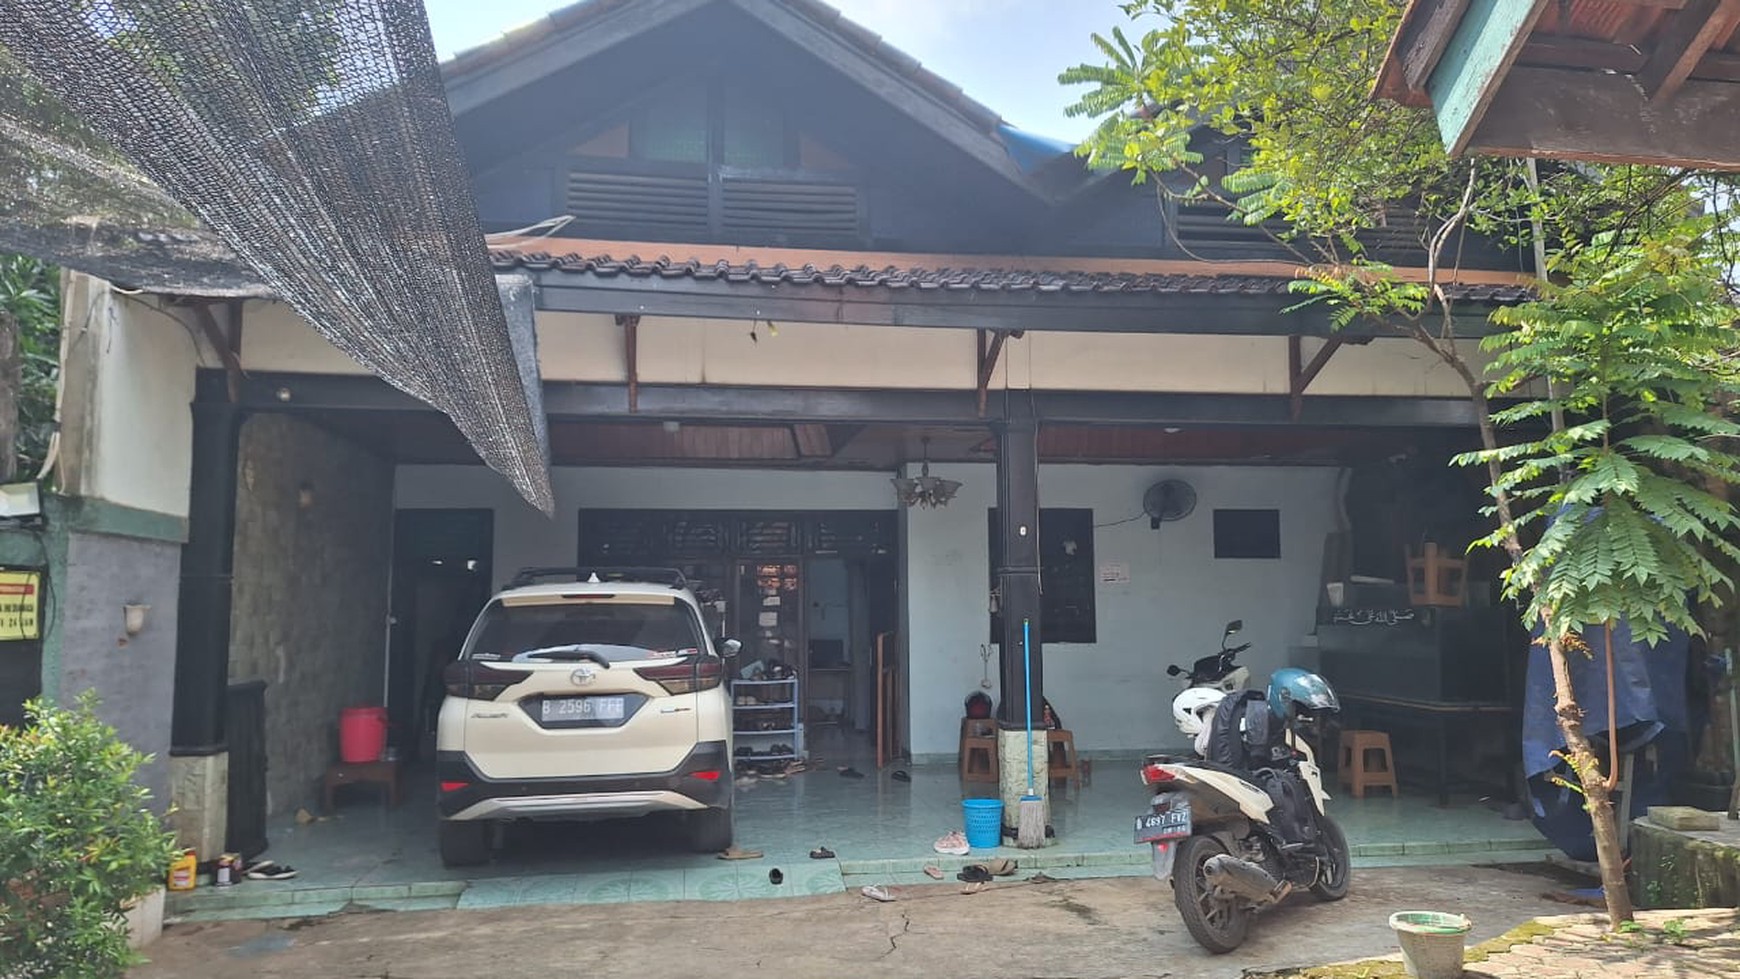 Rumah + Kios Jalan Utama Setia Mekar Rawa Kalong Tambun Selatan Bekasi